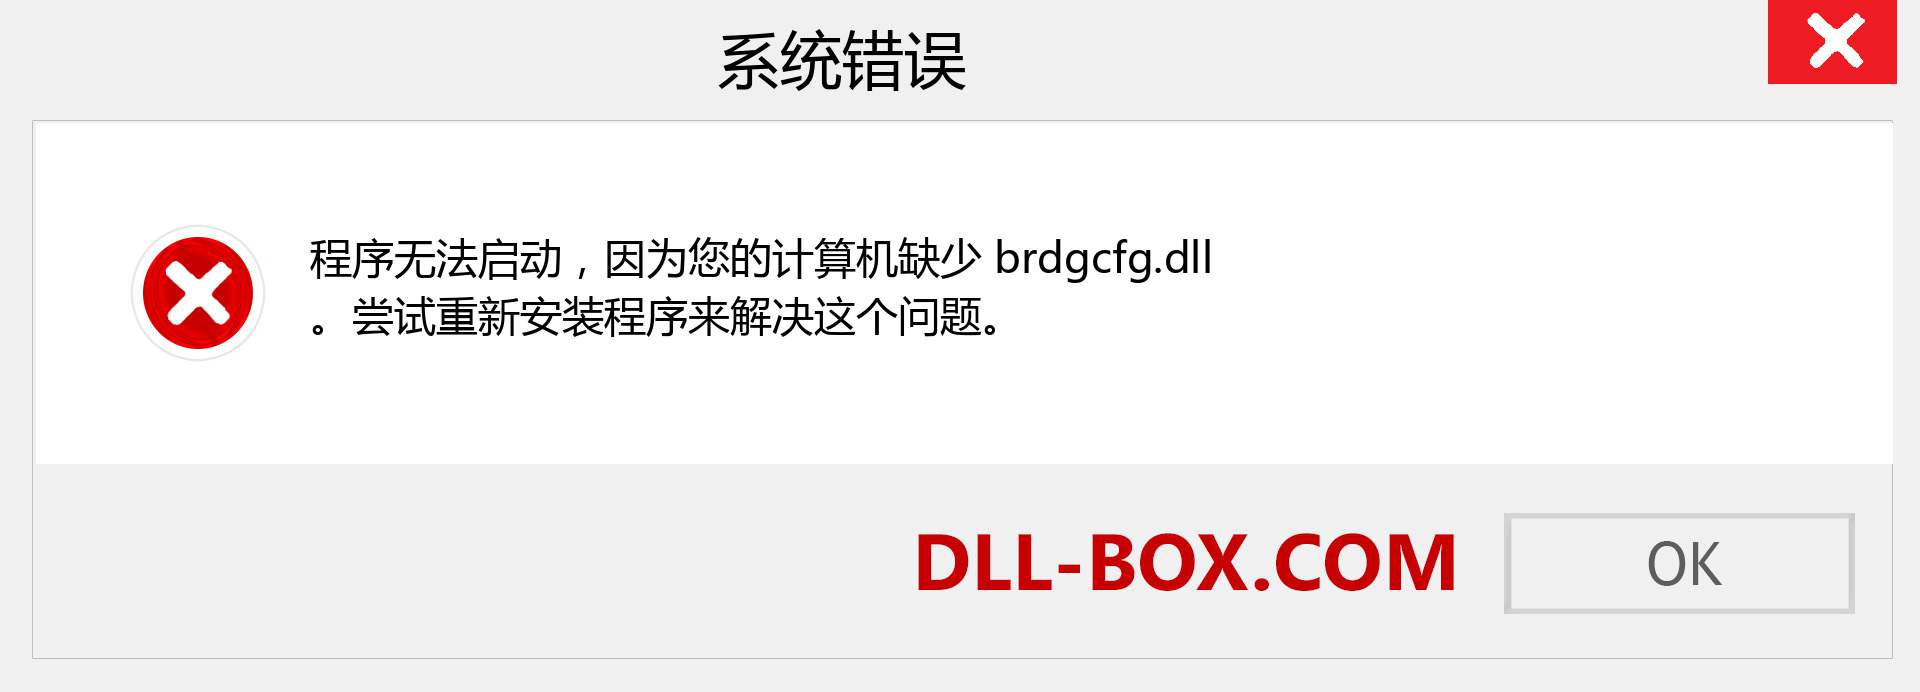 brdgcfg.dll 文件丢失？。 适用于 Windows 7、8、10 的下载 - 修复 Windows、照片、图像上的 brdgcfg dll 丢失错误